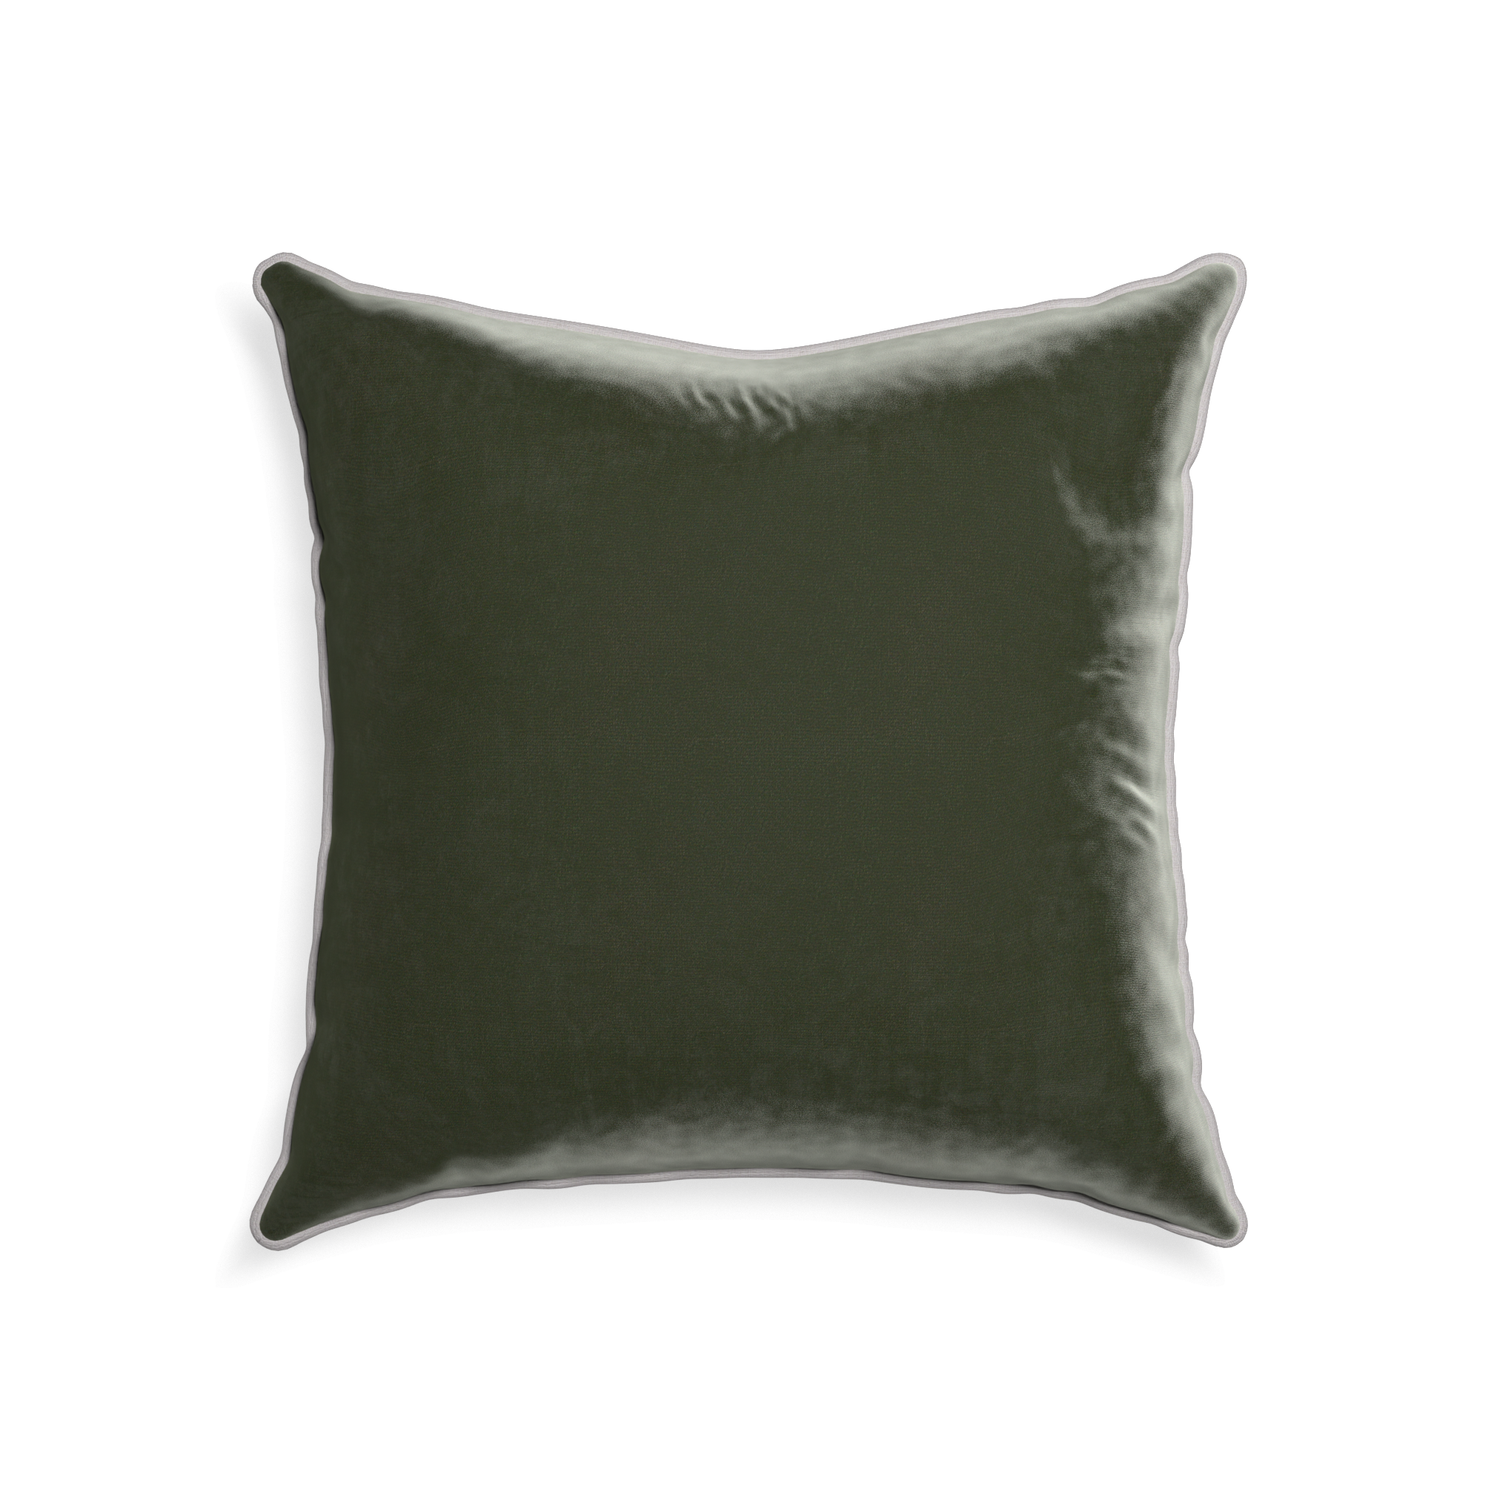 22-square fern velvet custom pillow with pebble piping on white background